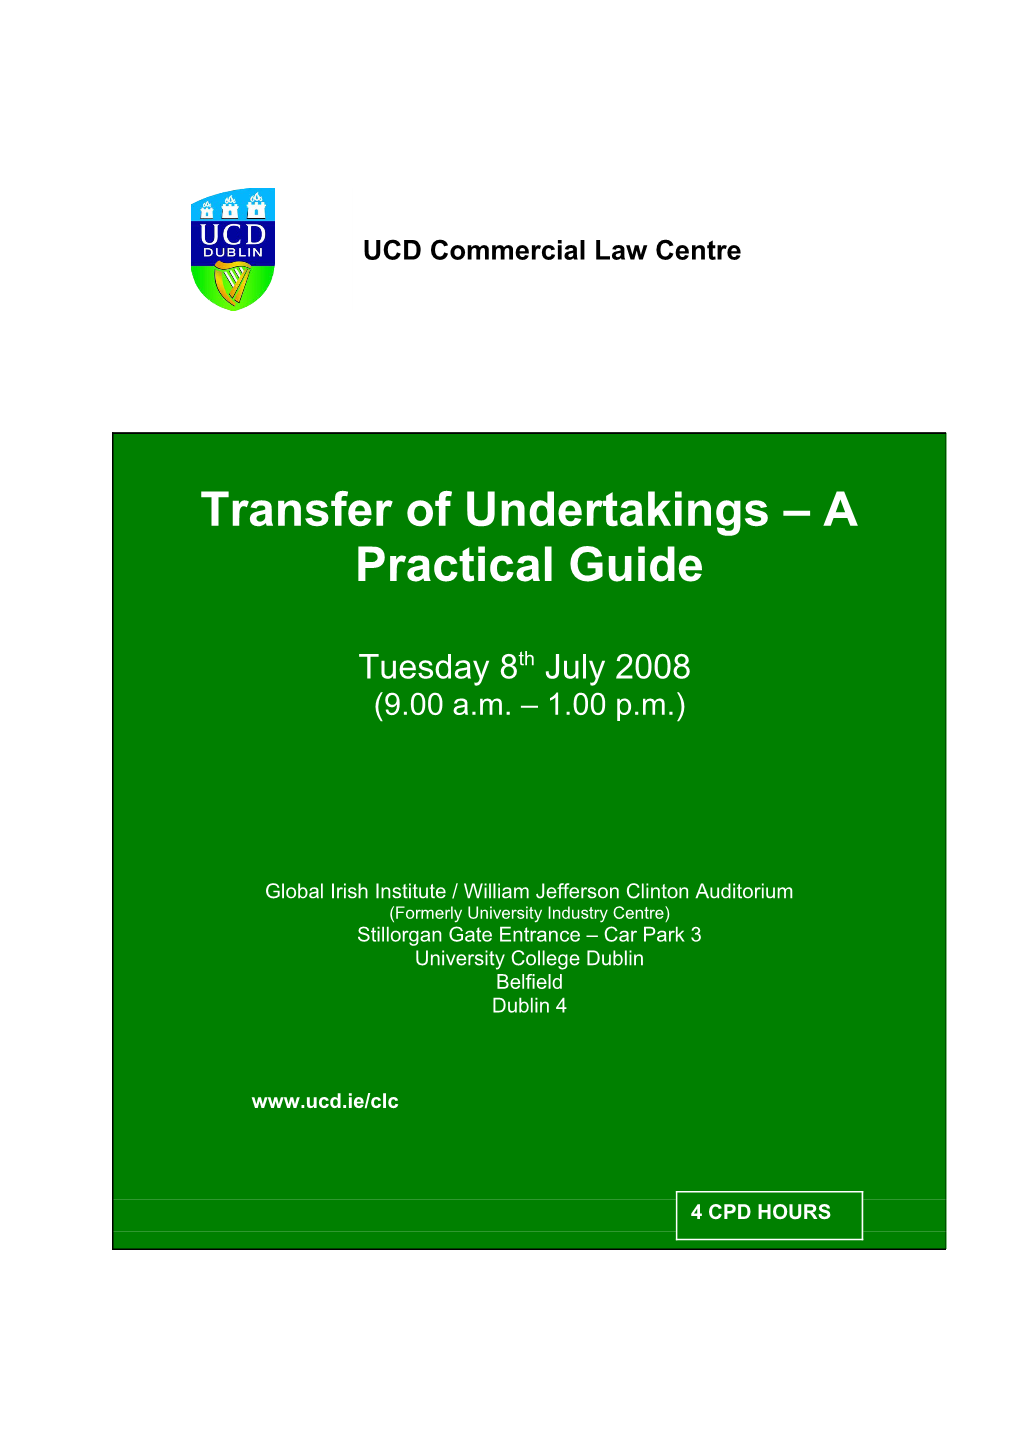 Transfer of Undertakings a Practical Guide